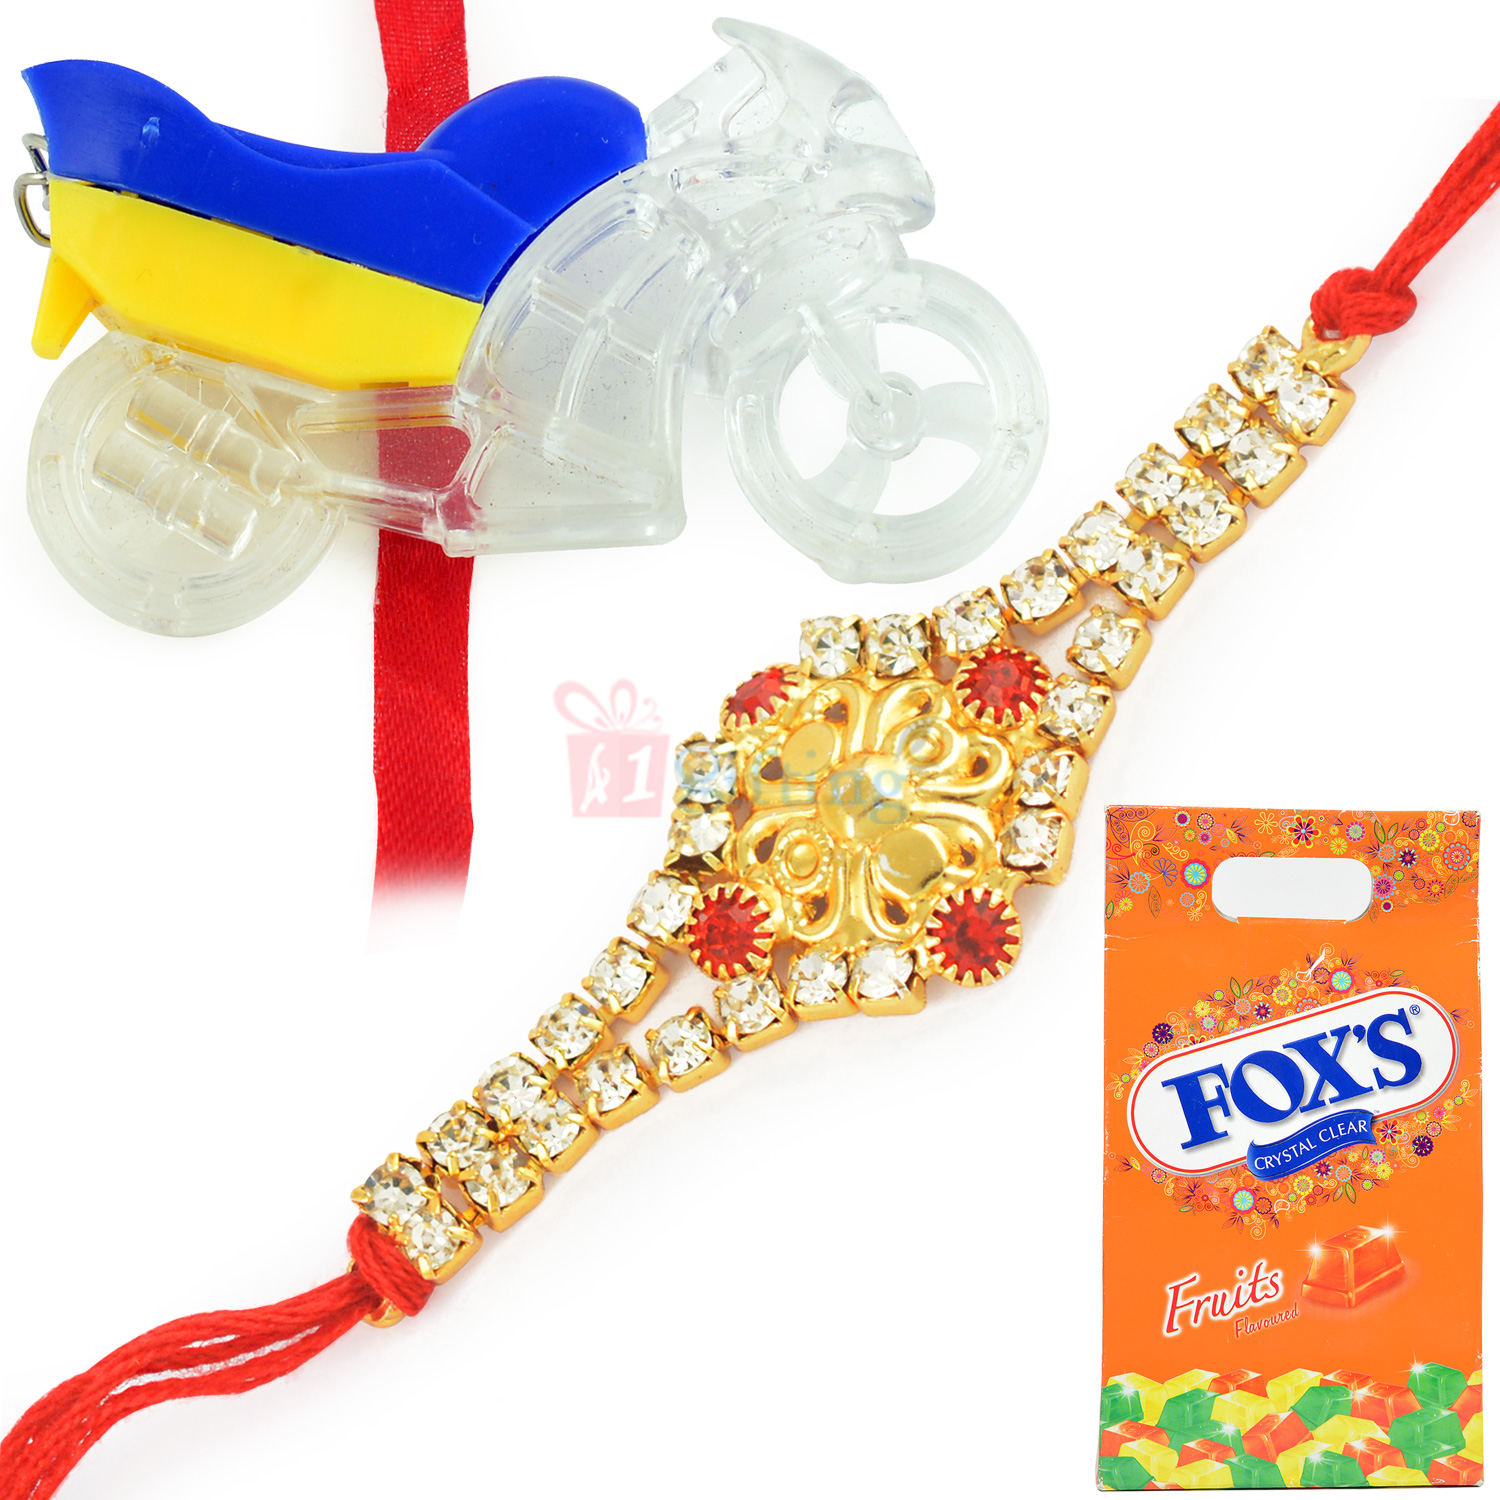 Kids Toy Rakhi with Jewel Rakhi and Foxs Fruits Chocolate